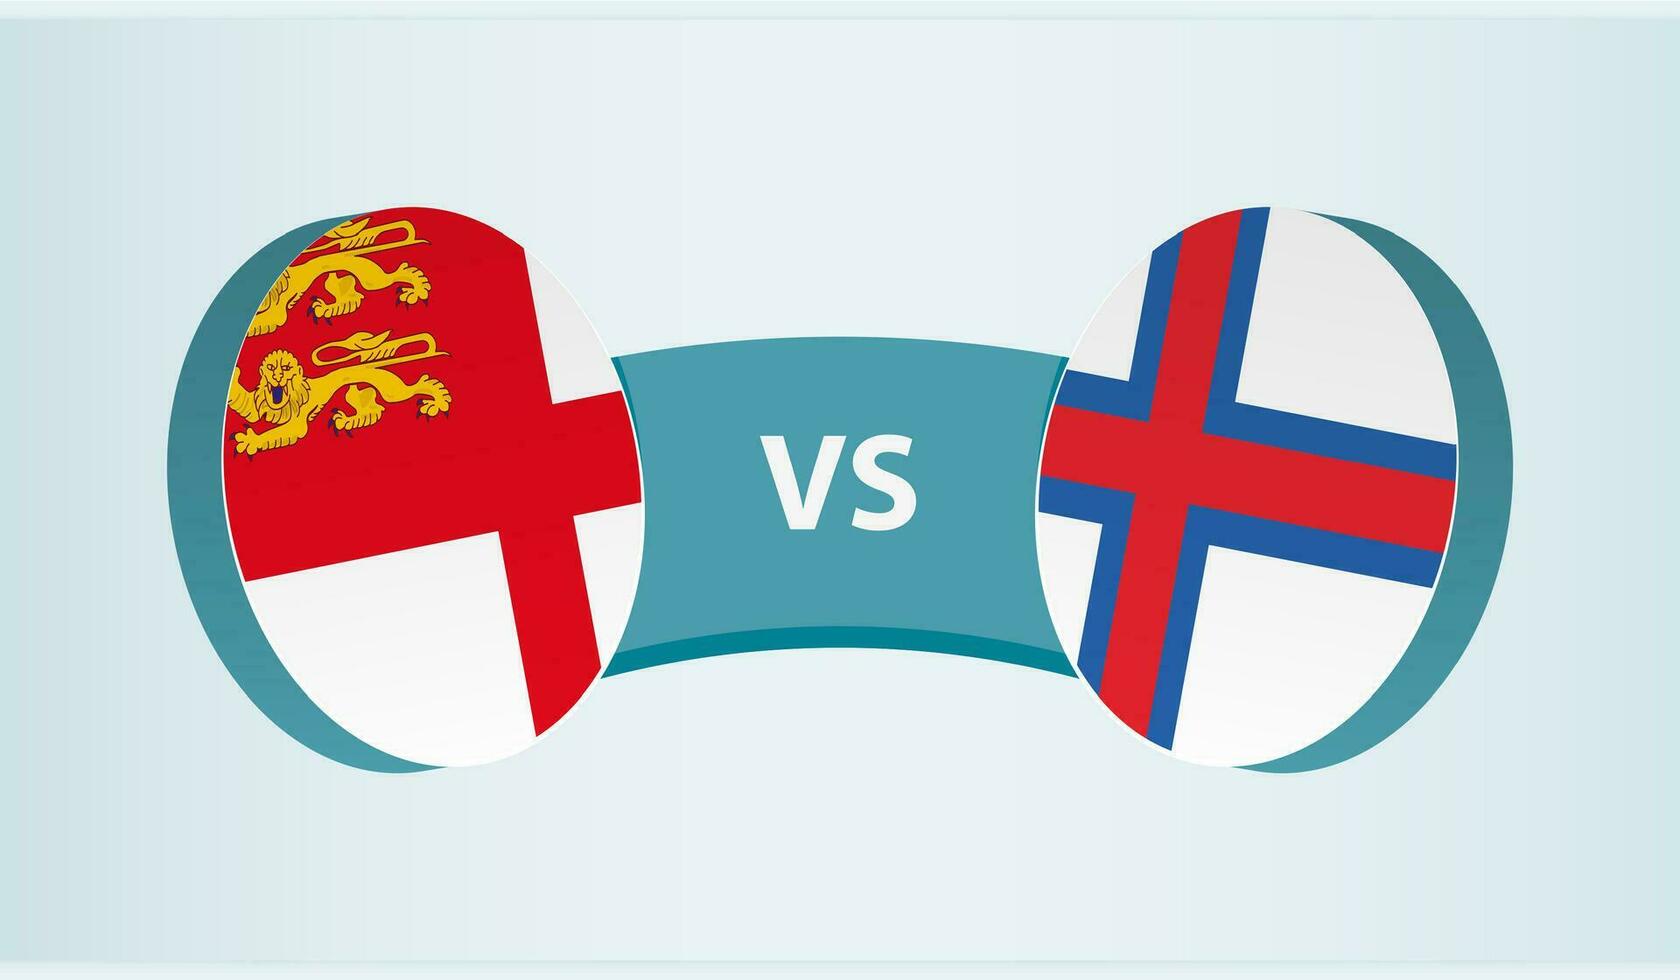 Sark versus Faroe Islands, team sports competition concept. vector